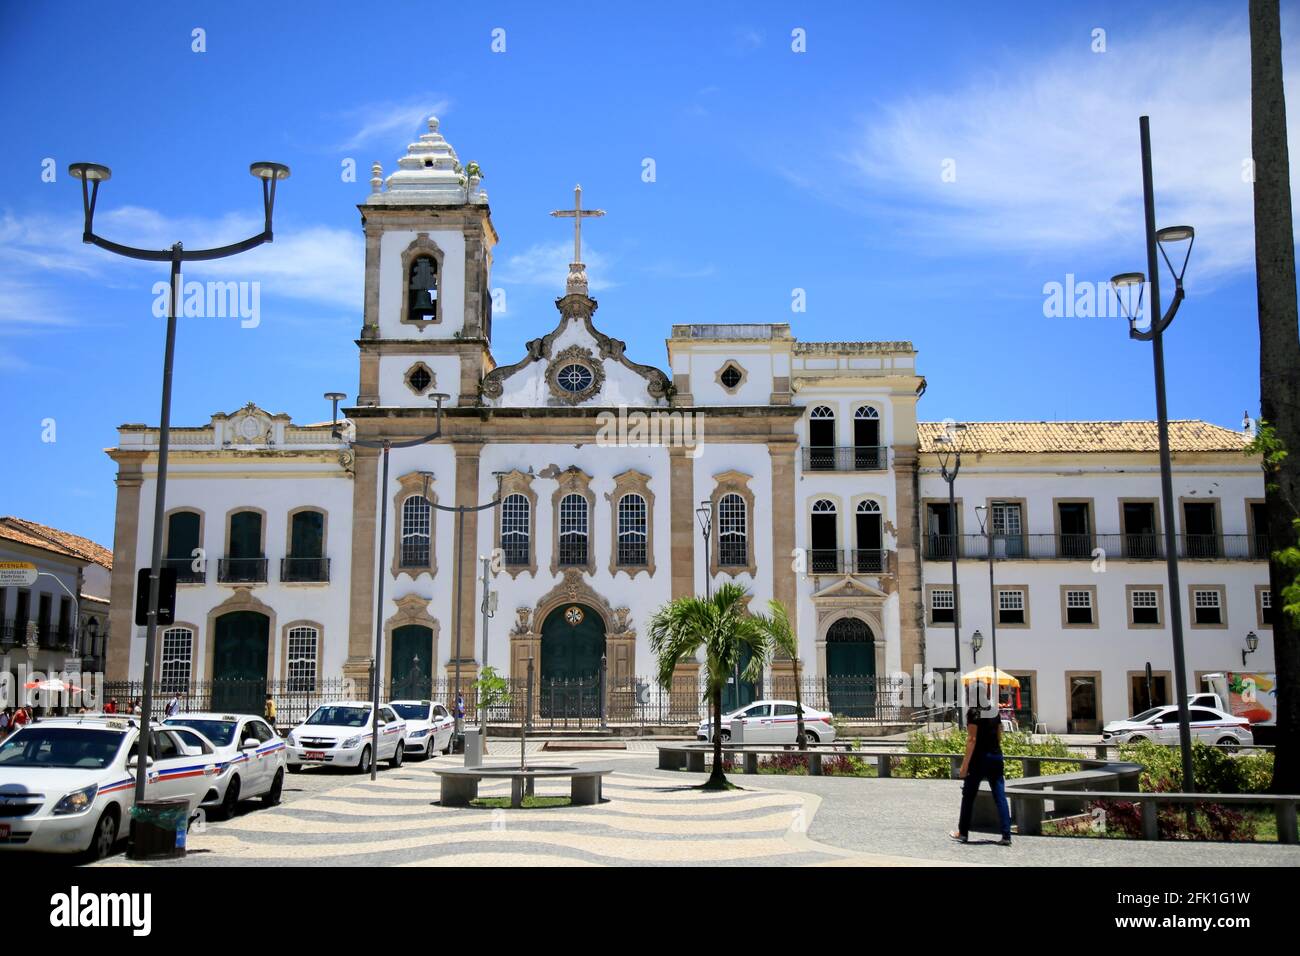 salvador, bahia, brasilien - 10. februar 2021: Blick auf den Platz Terreiro de Jesus in Pelourinhoin der Stadt Salvador. *** Ortsüberschrift *** Stockfoto